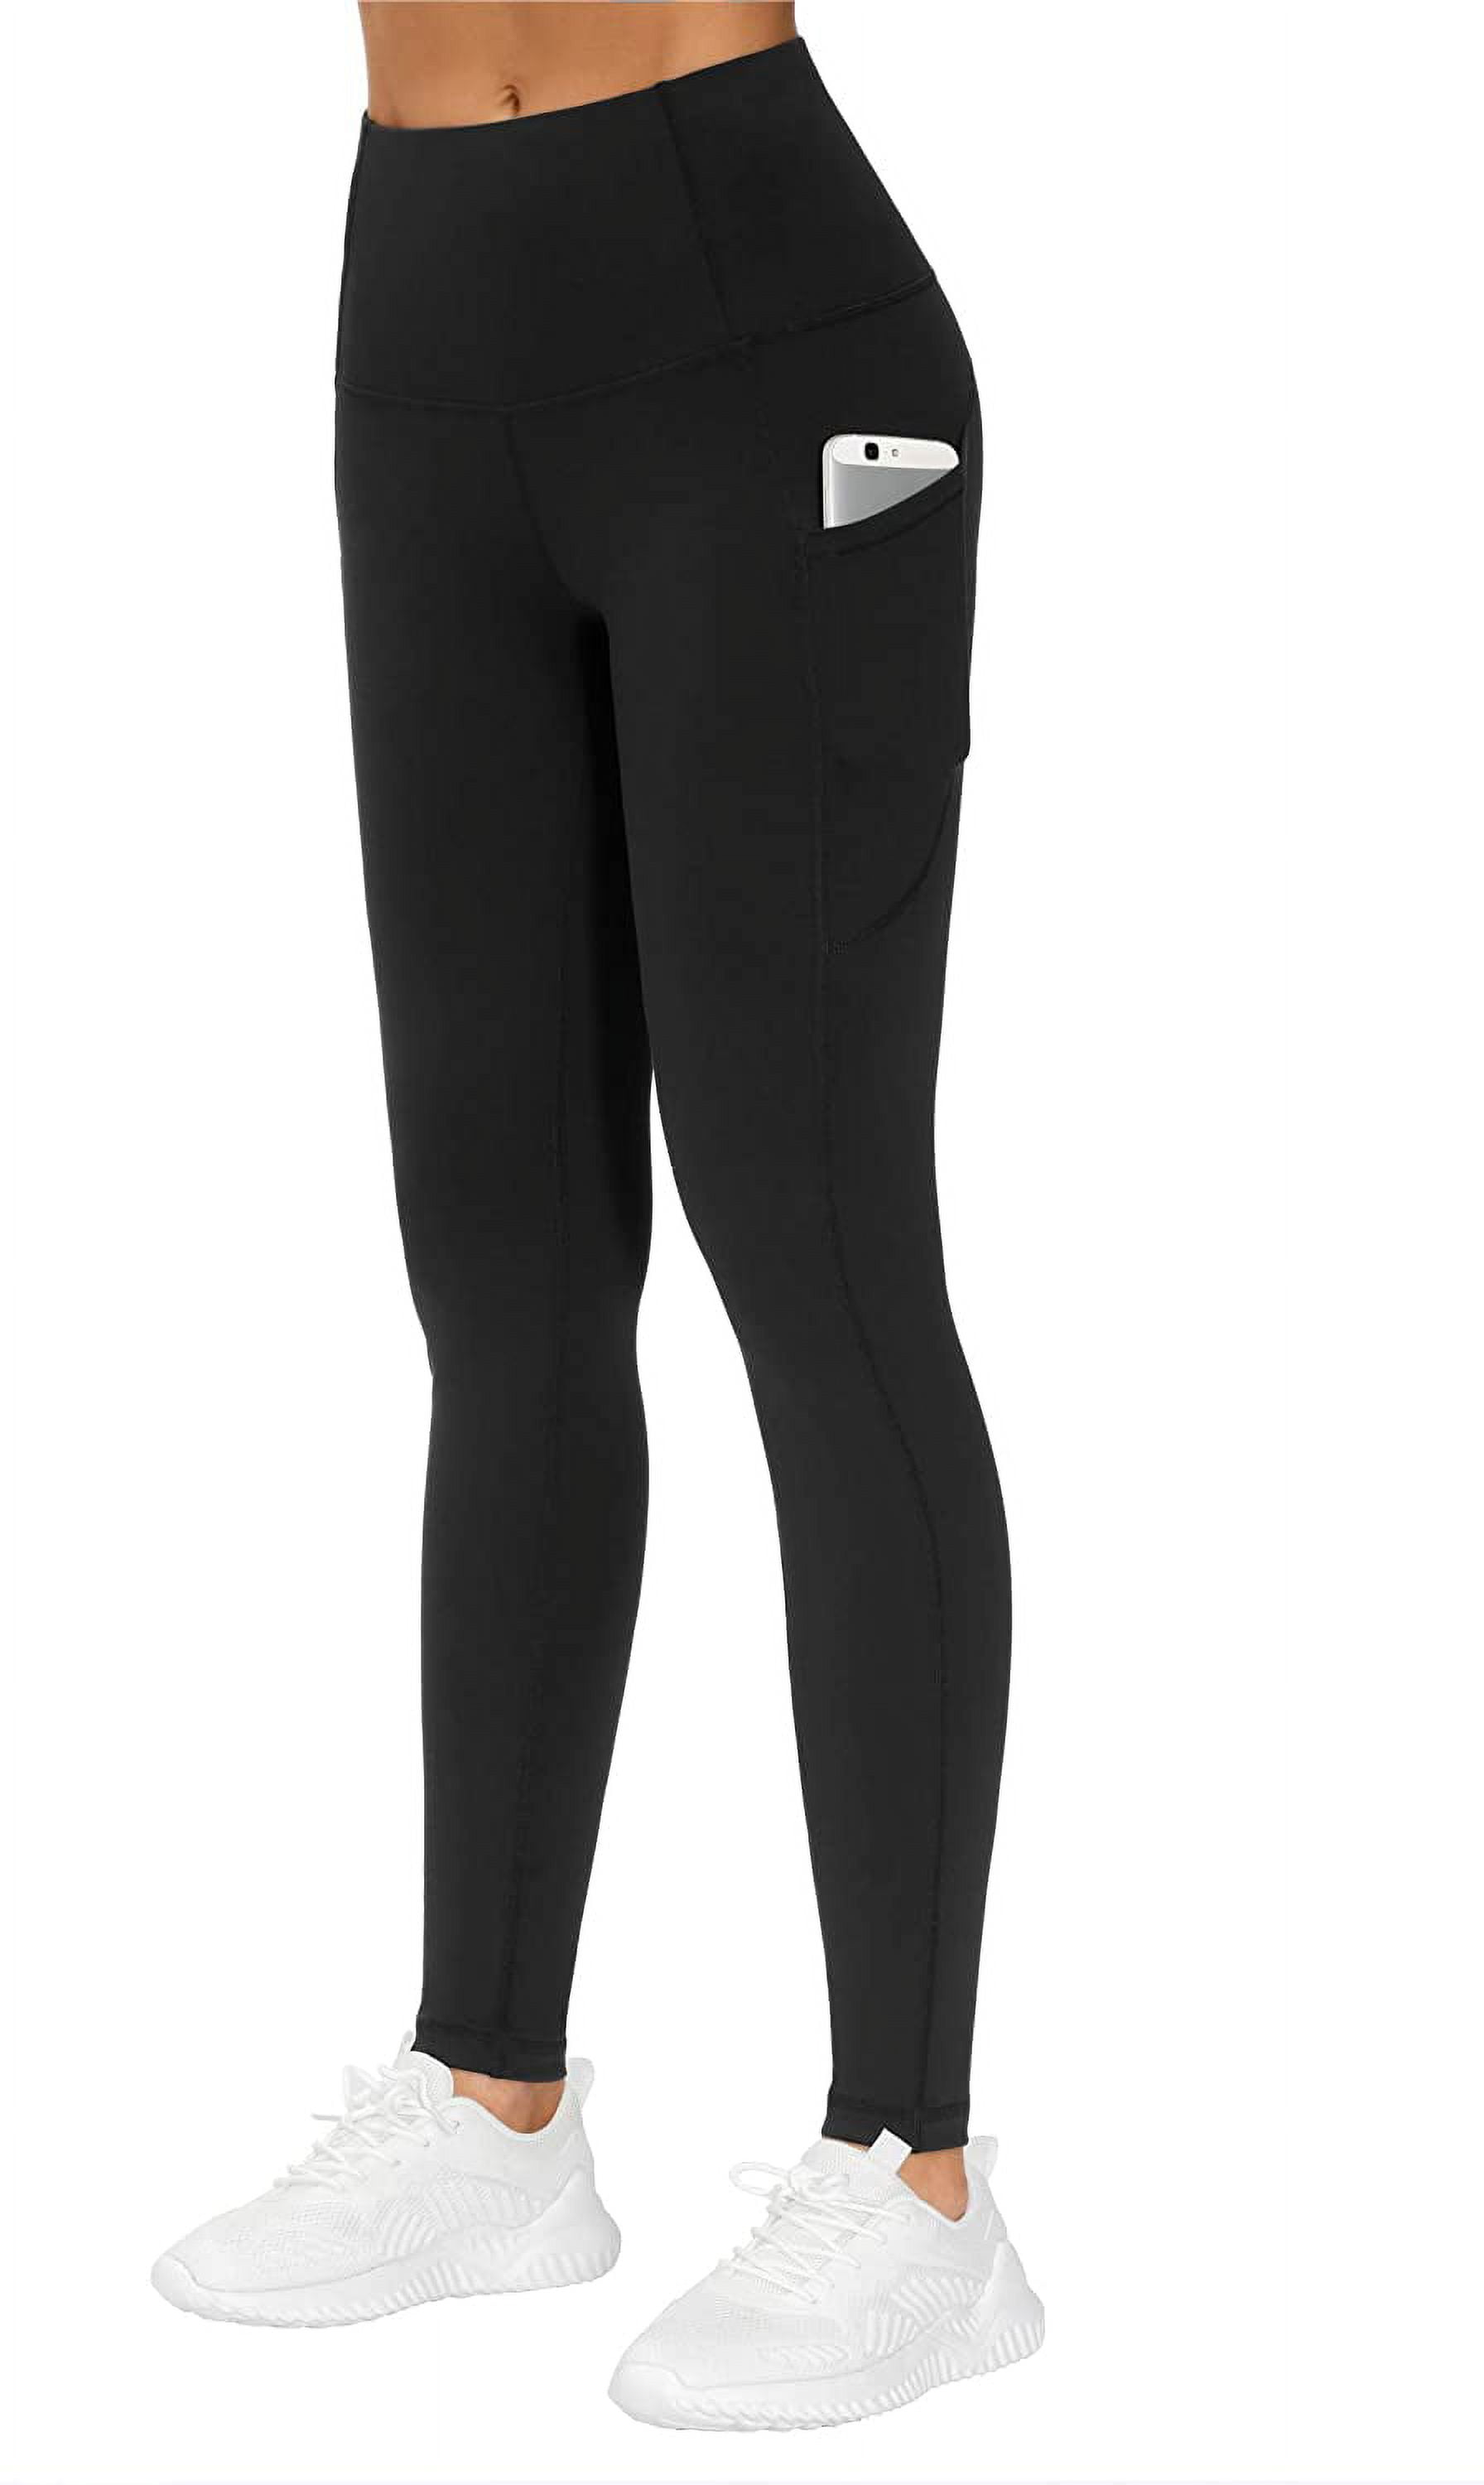 yeuG Women's Plus Size Leggings with Pocket-2 Pack High Waist Tummy Control  Yoga Pants Spandex Workout Running Black Leggings : : Clothing